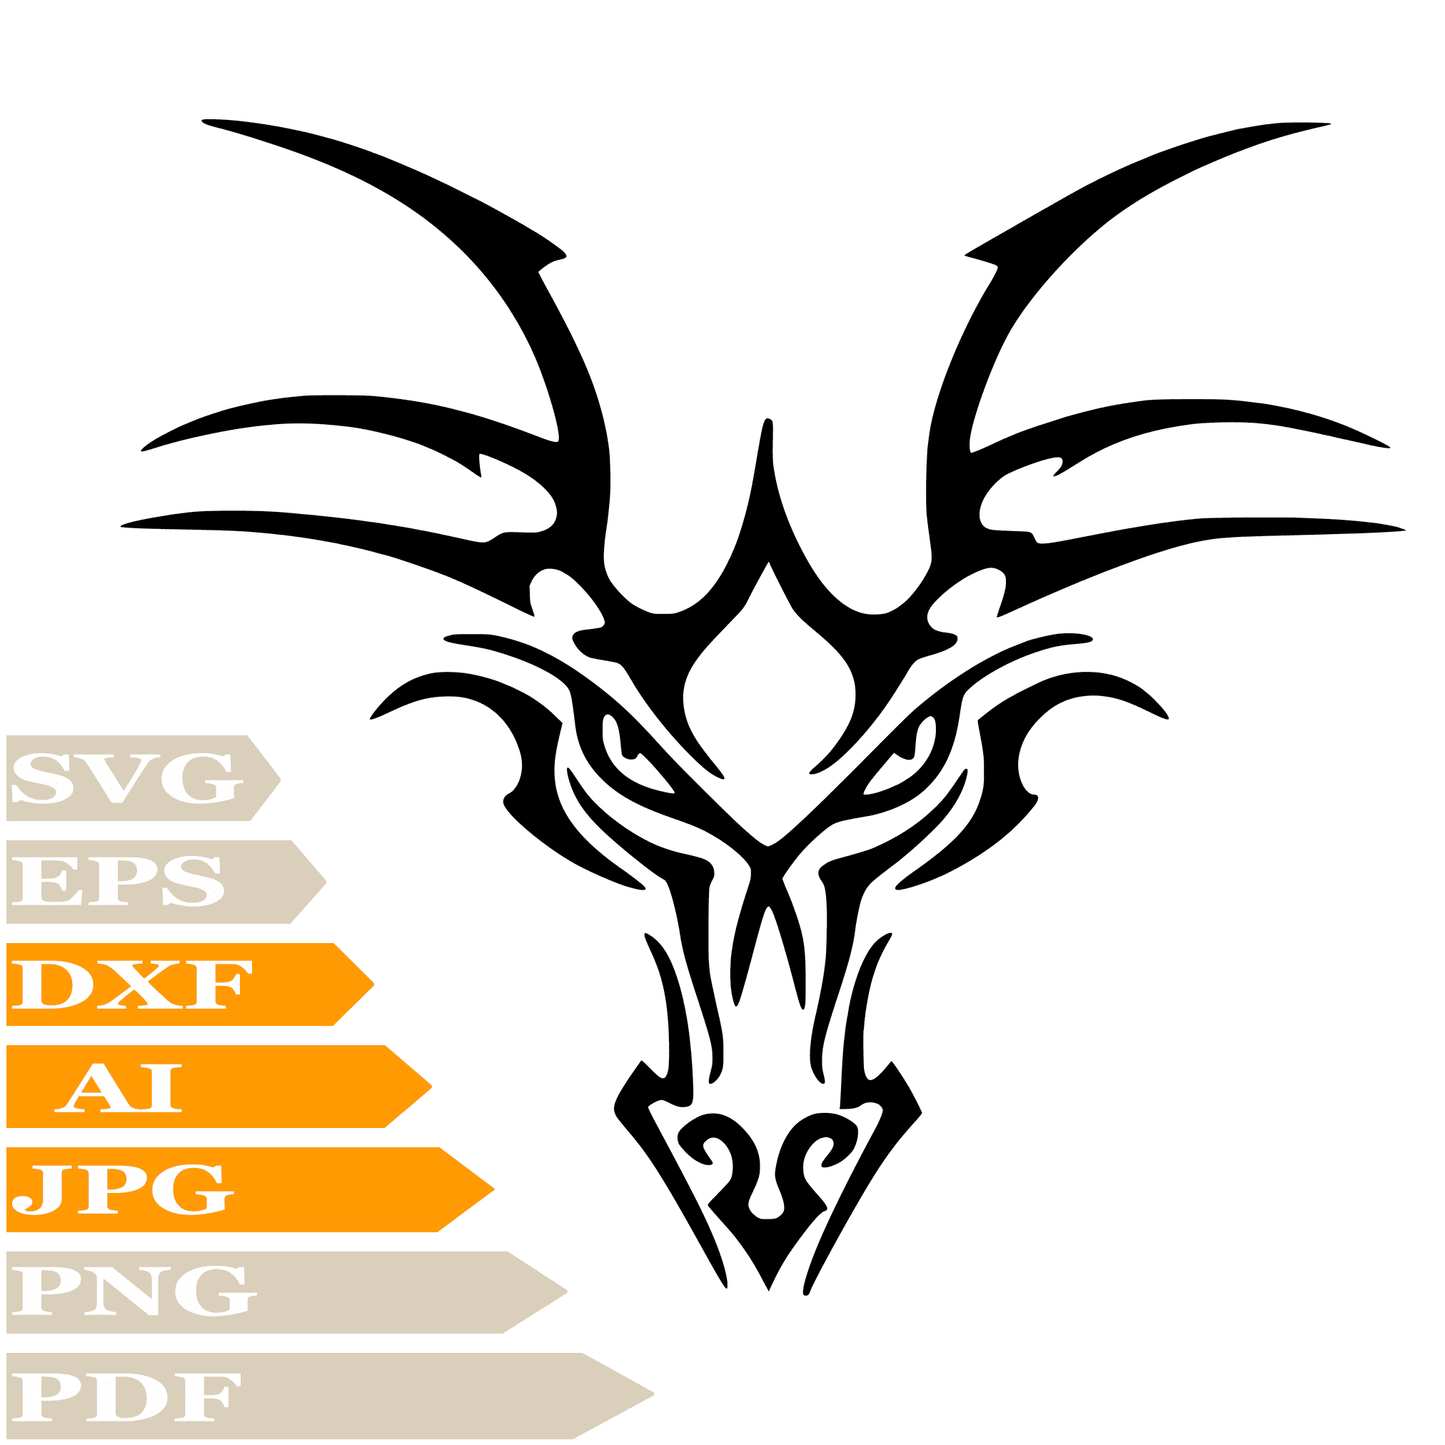 Dragon SVG File-Dragon Head Drawing SVG-Eil Dragon Head Vector Clip Art-Image Cut Files-Illustration-PNG-Circuit-Digital Files-For Shirts-Silhouette